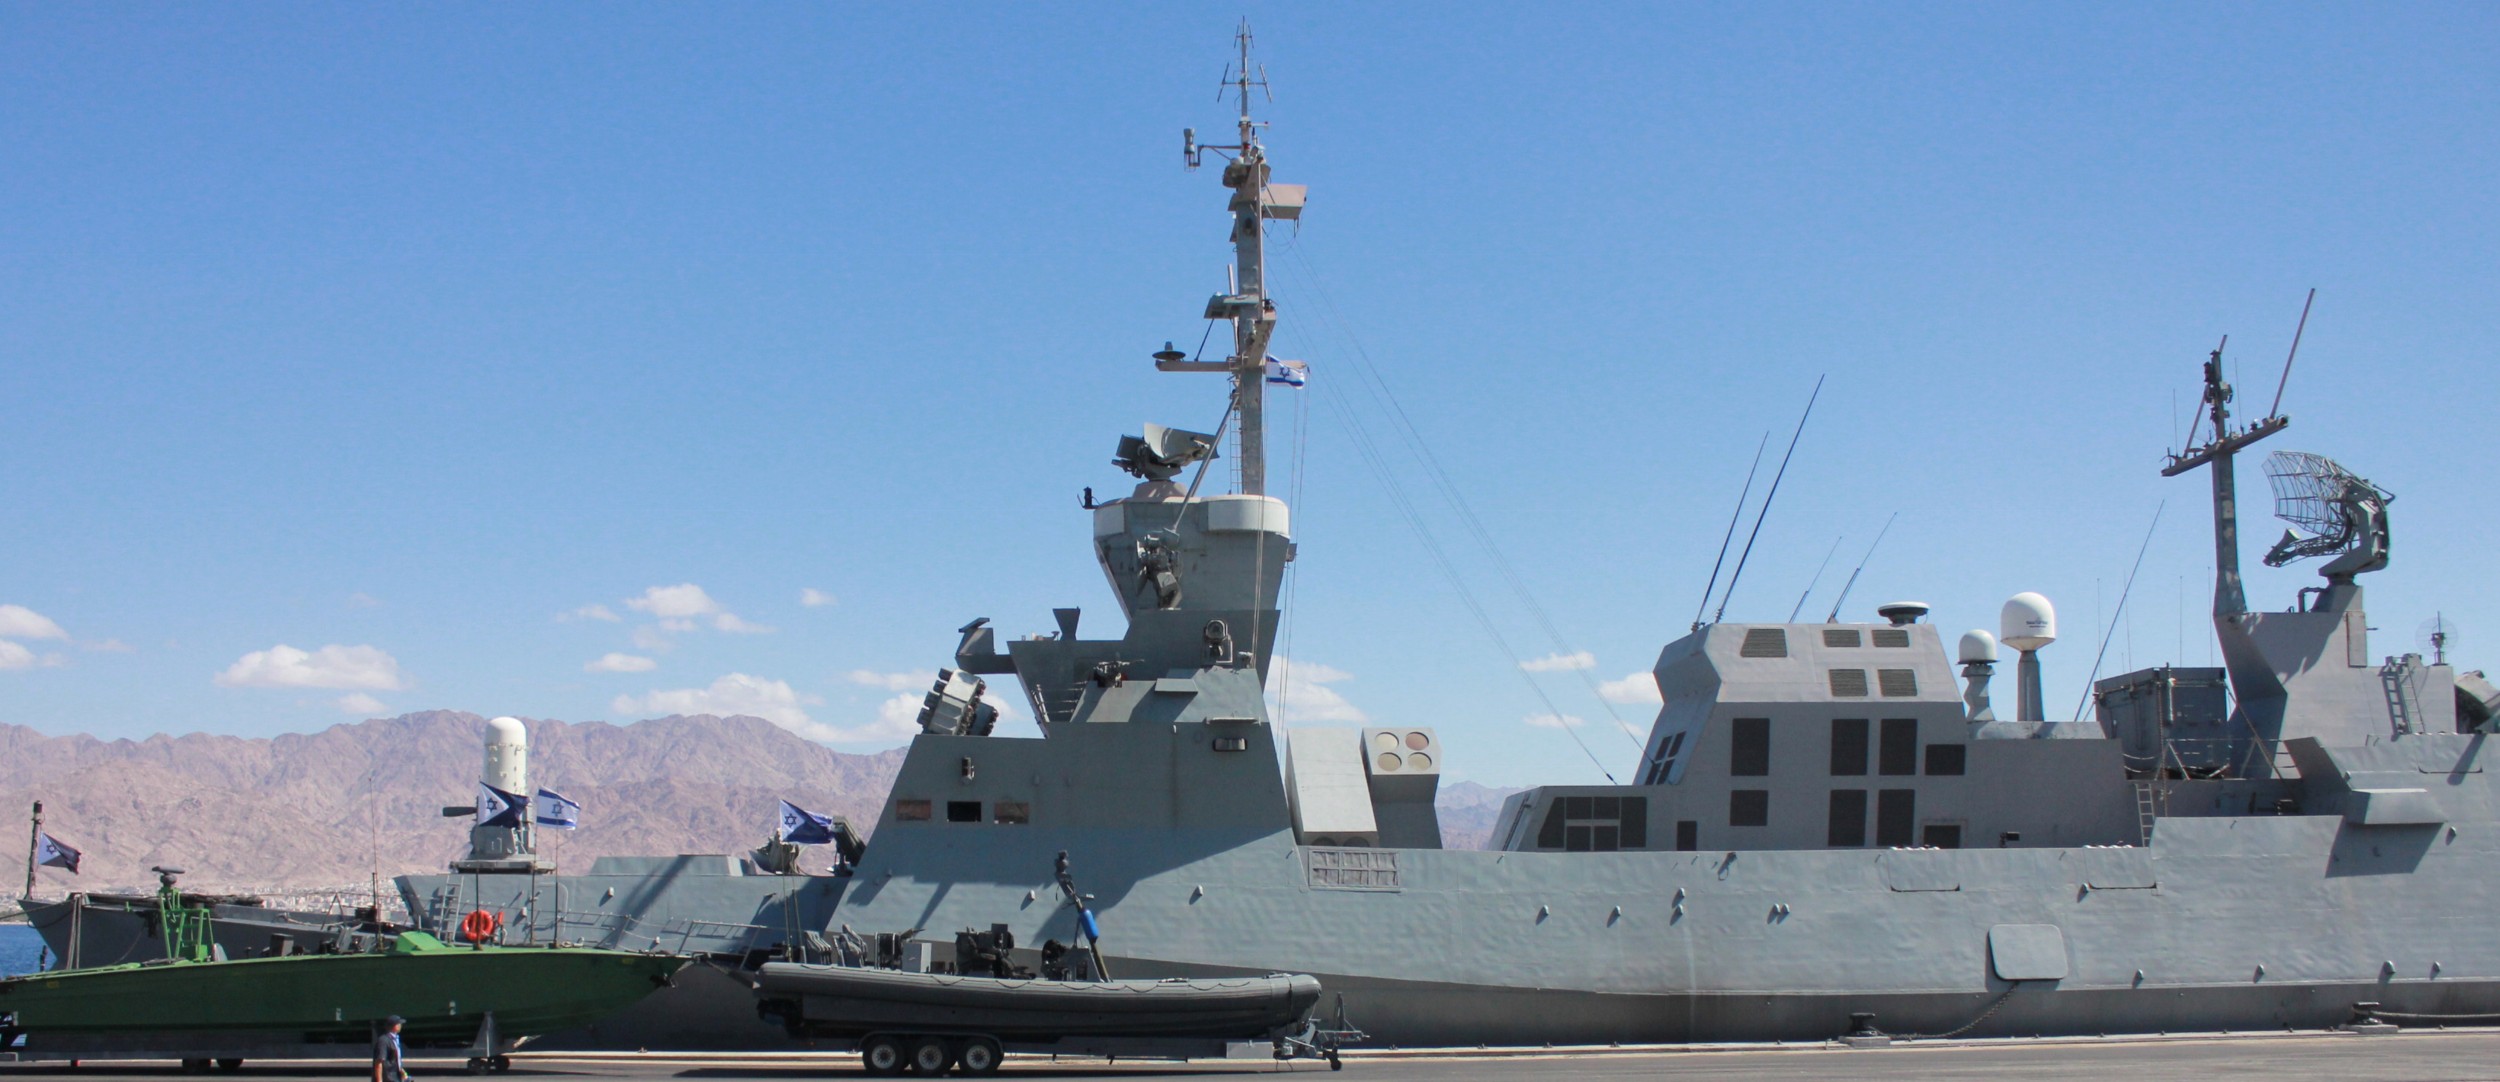 sa'ar 5 class missile corvette israeli navy heil hayam ins eilat lahav hanit 07